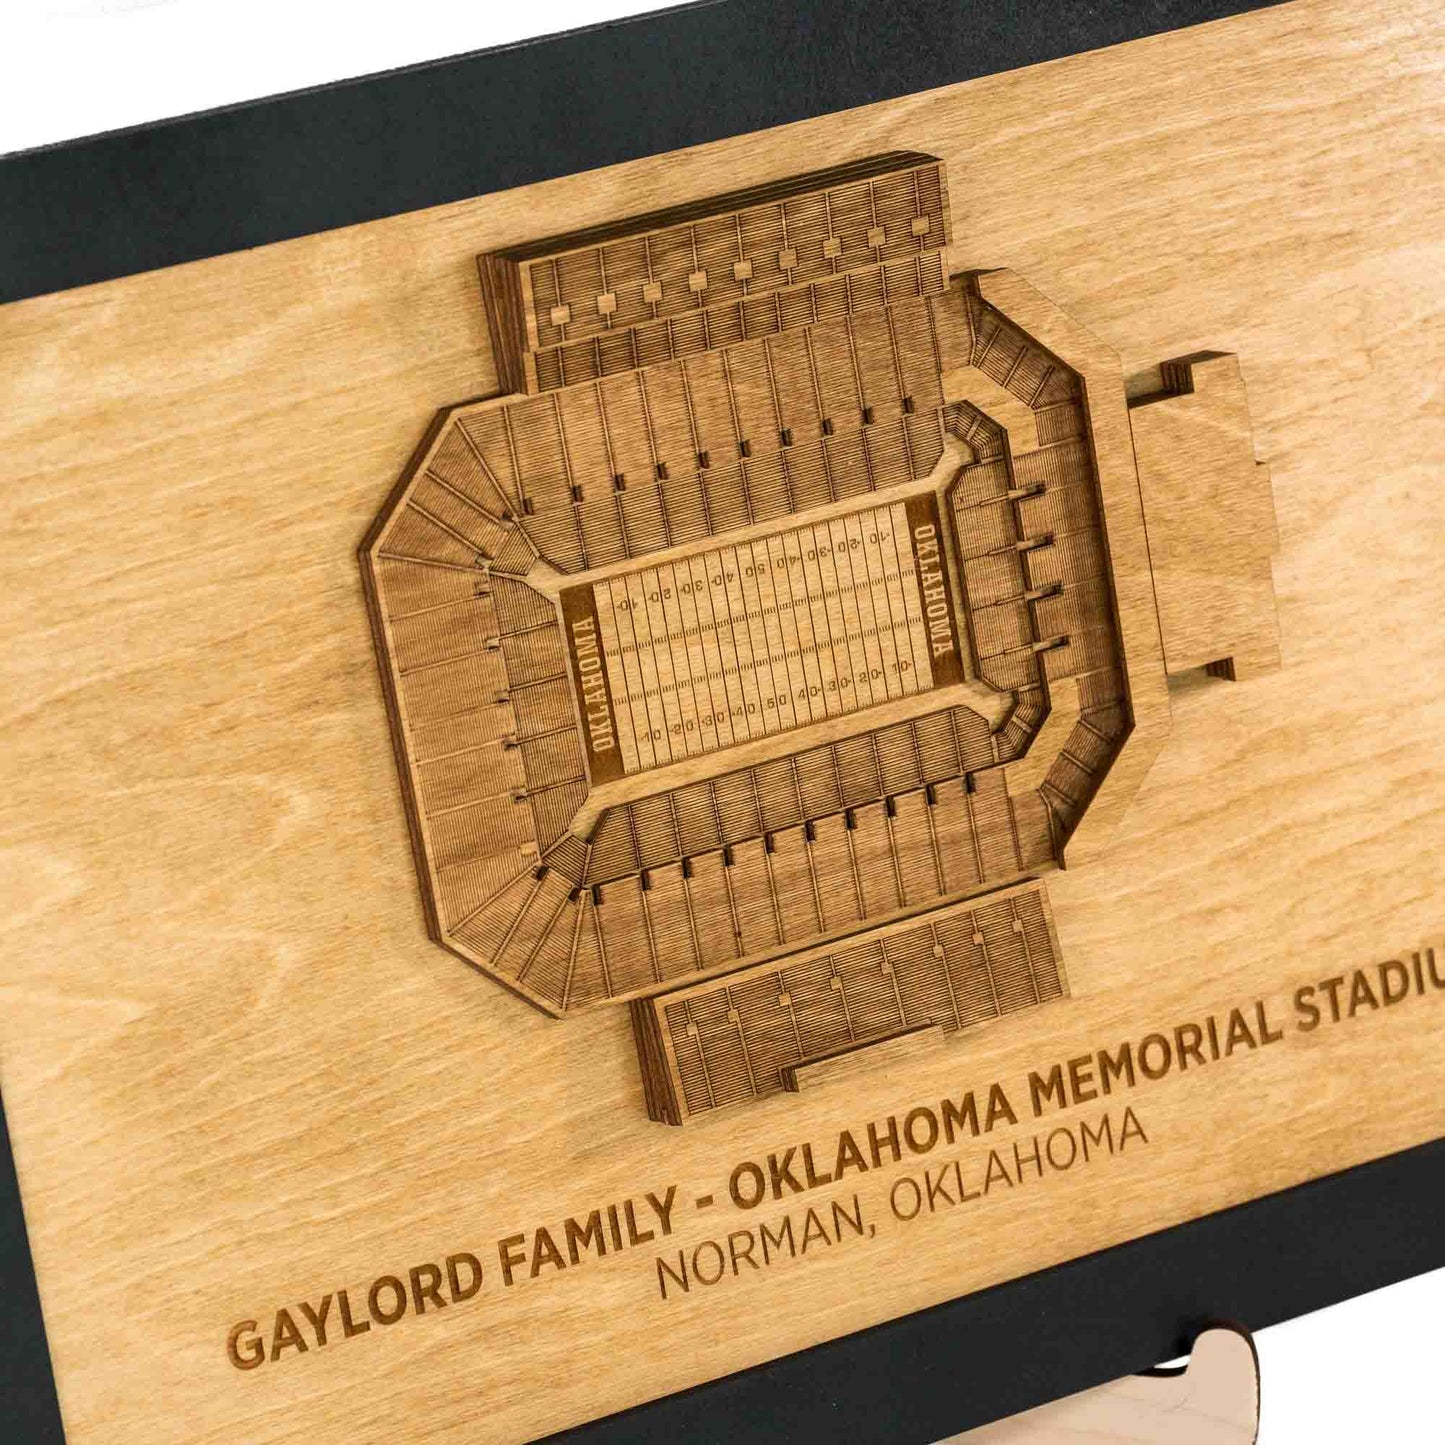 Gaylord Family - Oklahoma Memorial Stadium Art